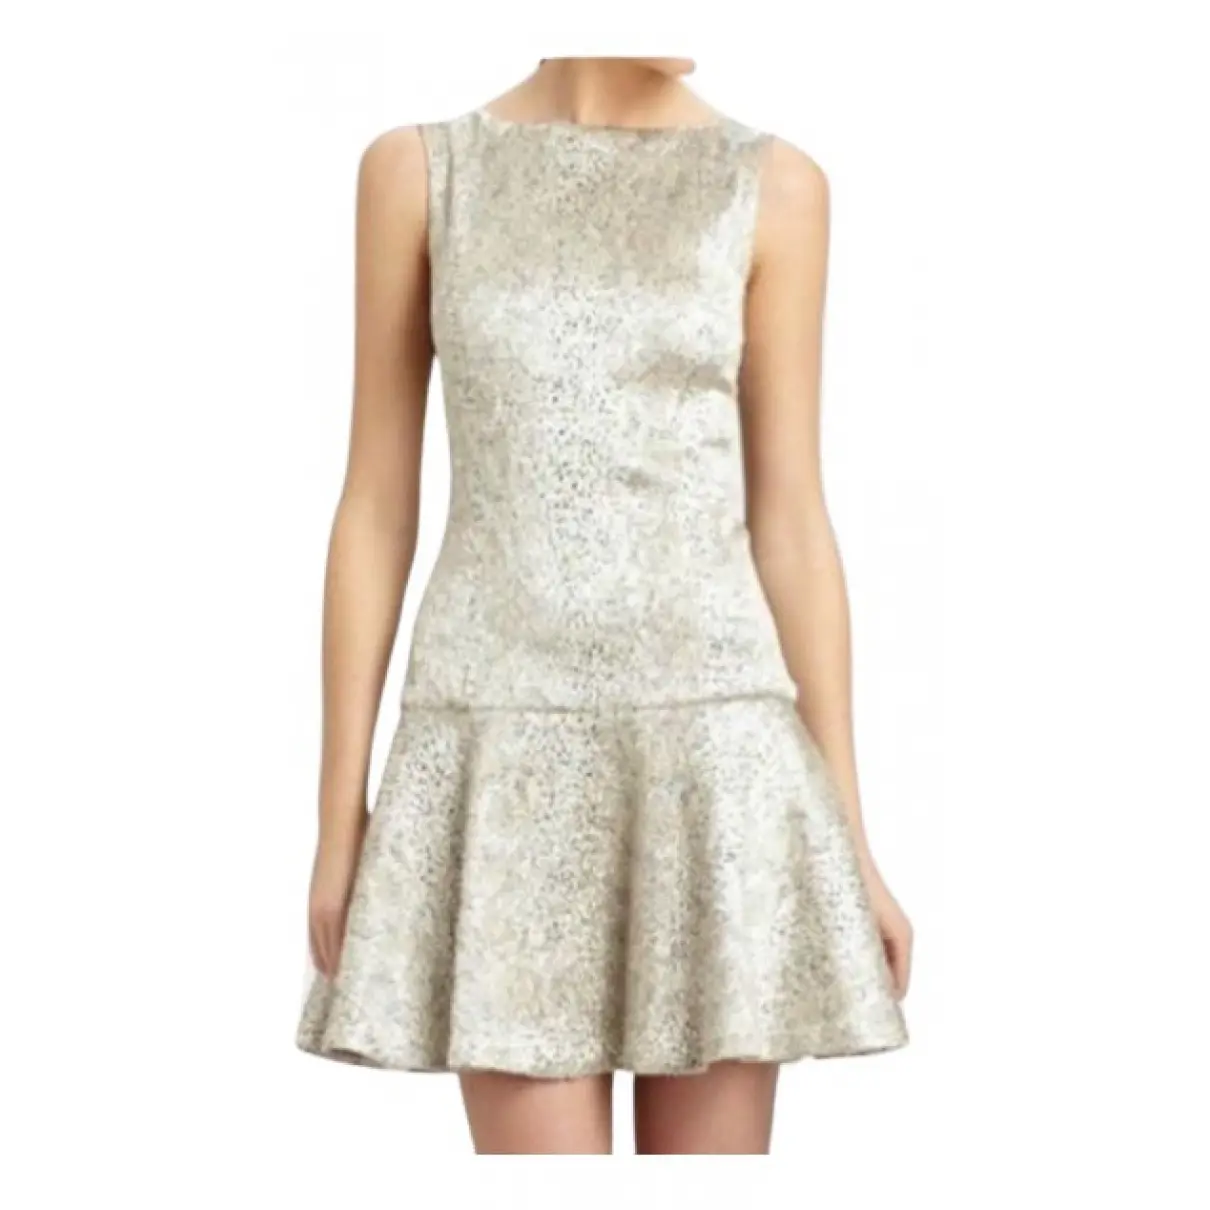 Buy Alice & Olivia Glitter dress online